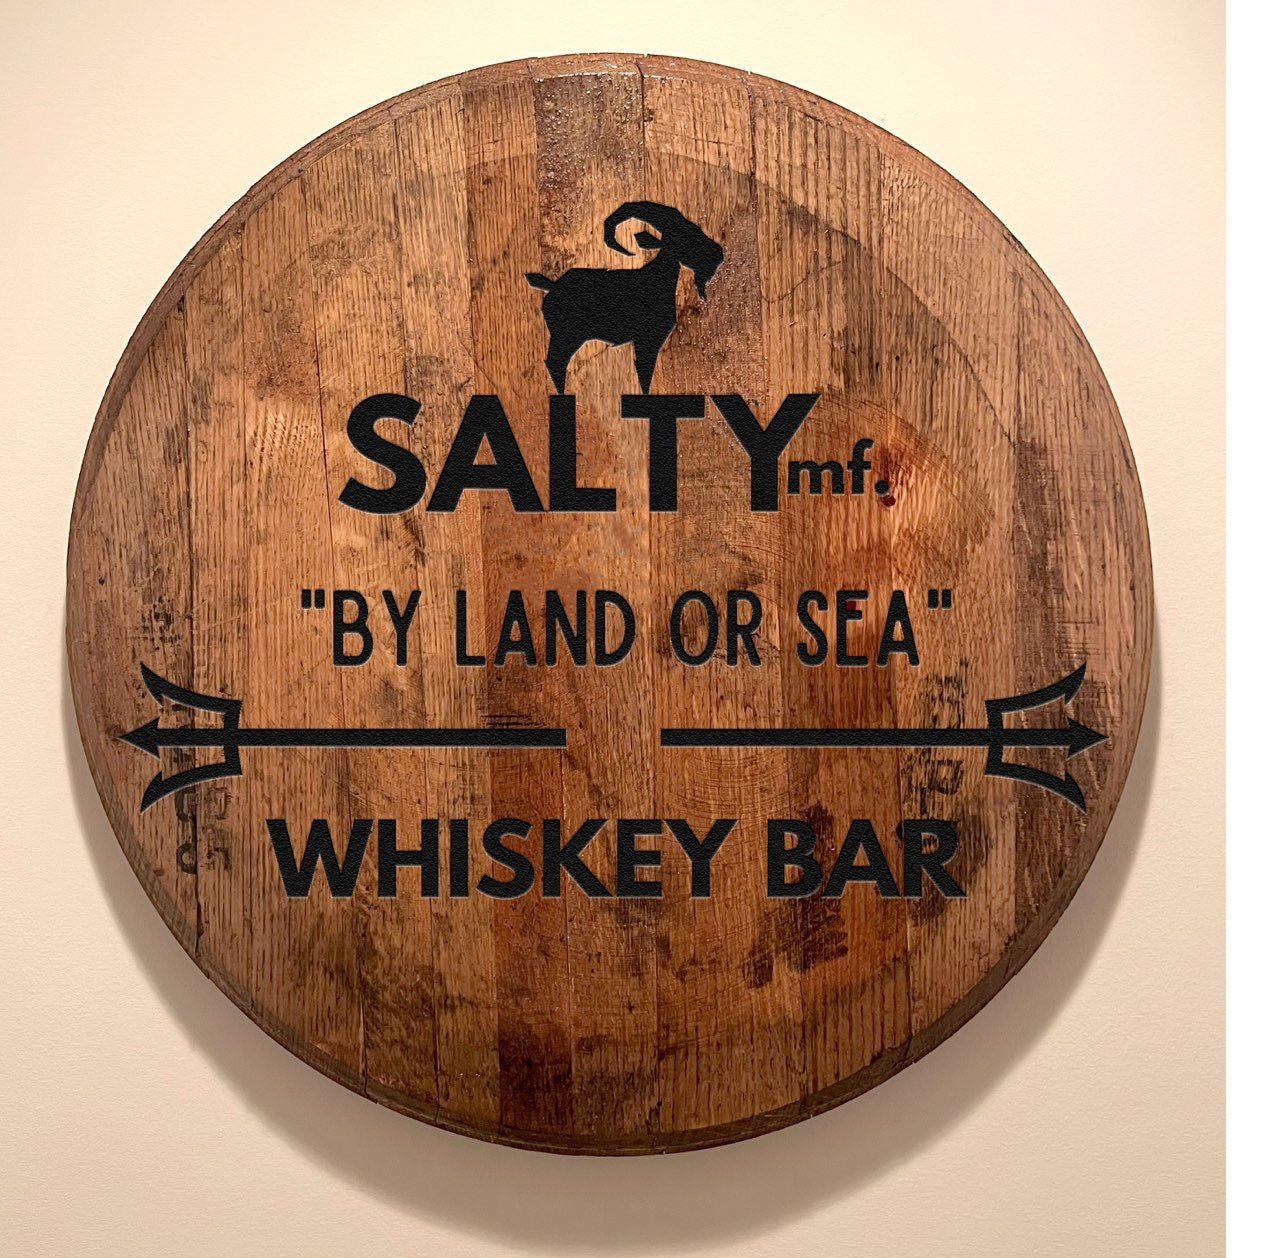 The SaltyMF Authentic Land or Sea Bar Barrel Head.